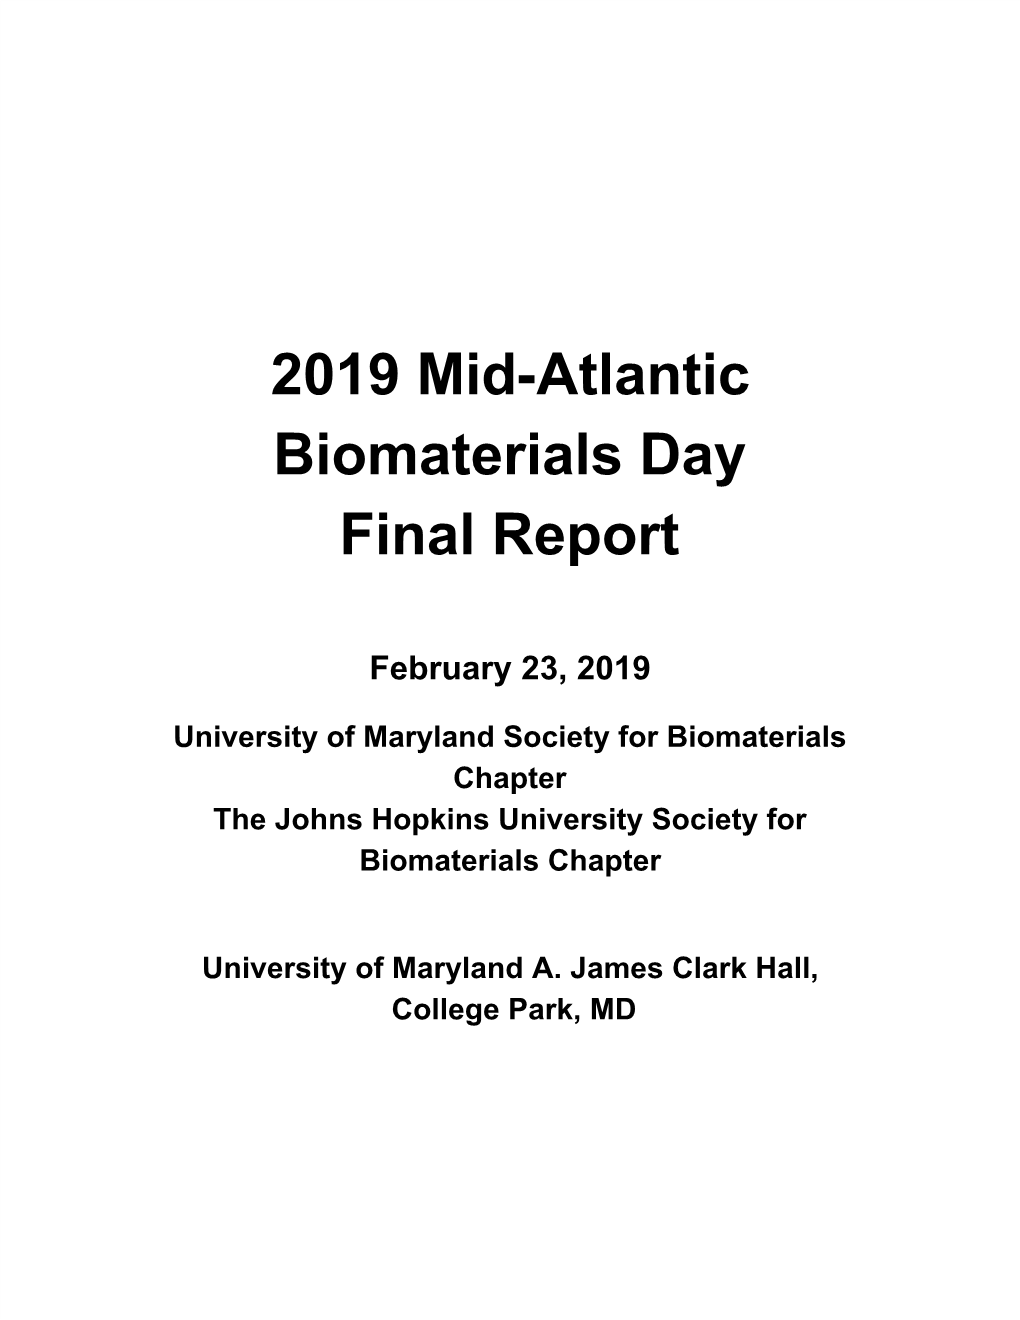 2019 Mid-Atlantic Biomaterials Day Final Report